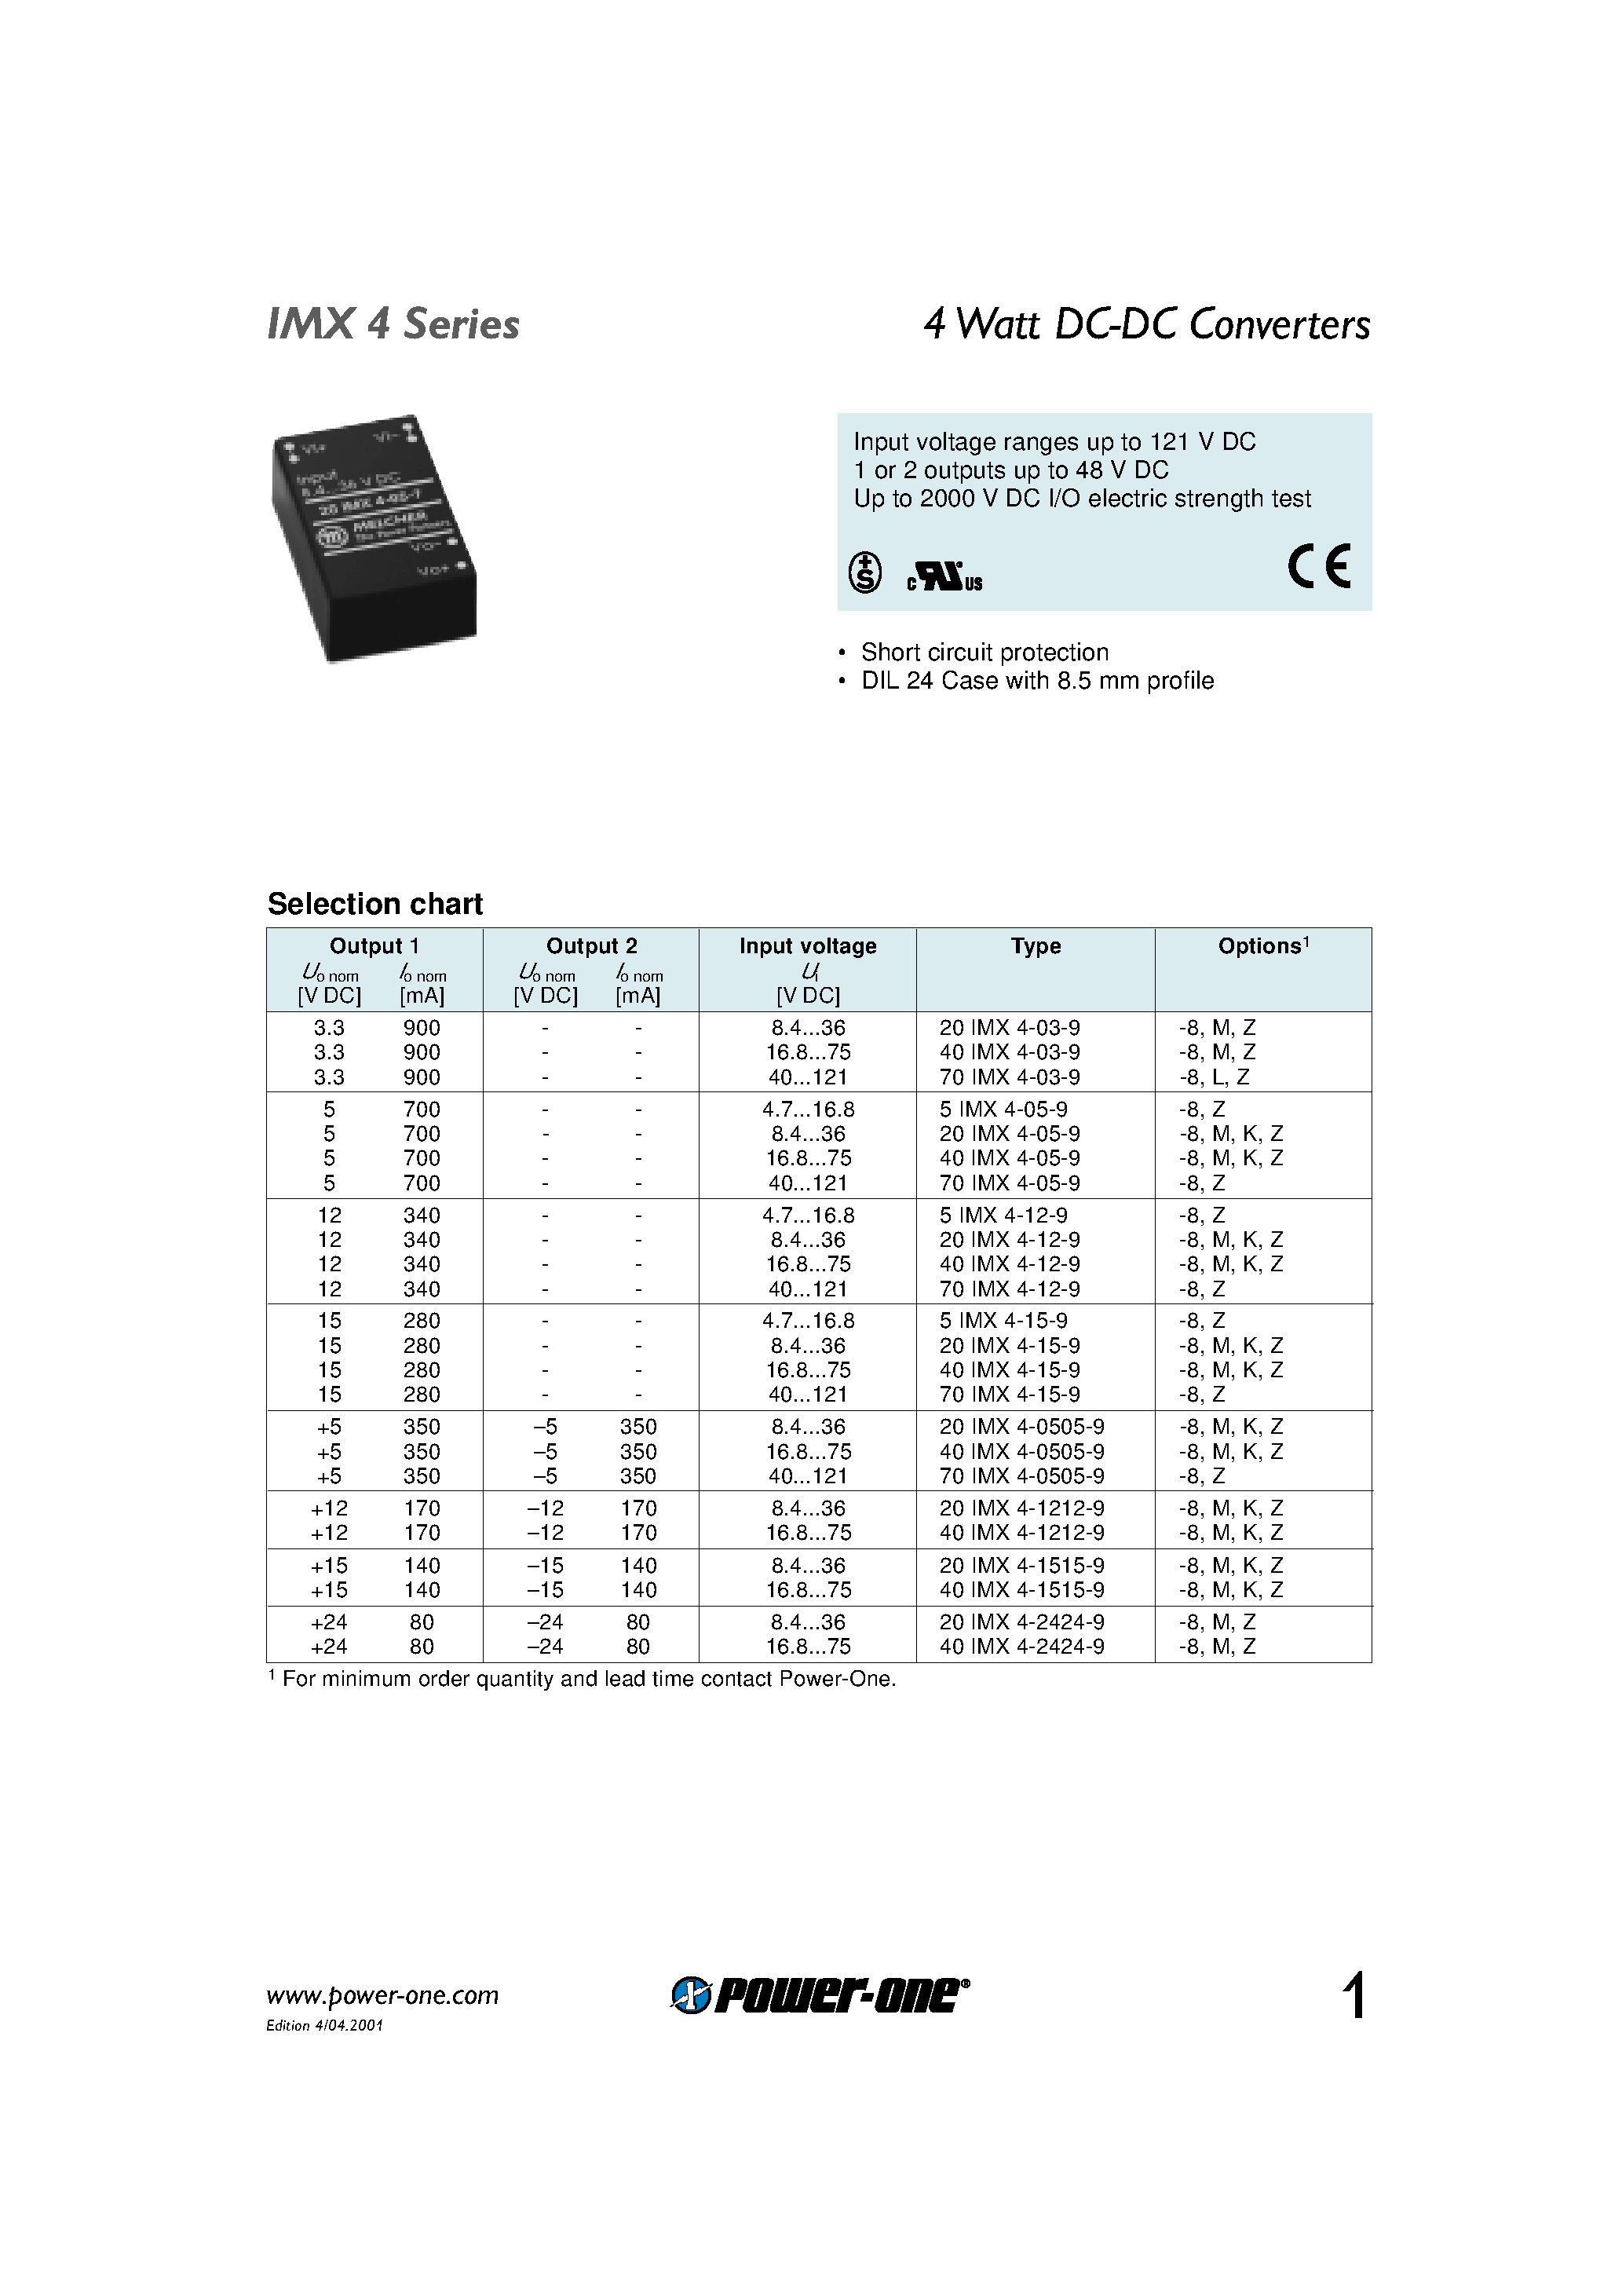 Datasheet 40IMX4-15-9 - 4 Watt DC-DC Converters page 1